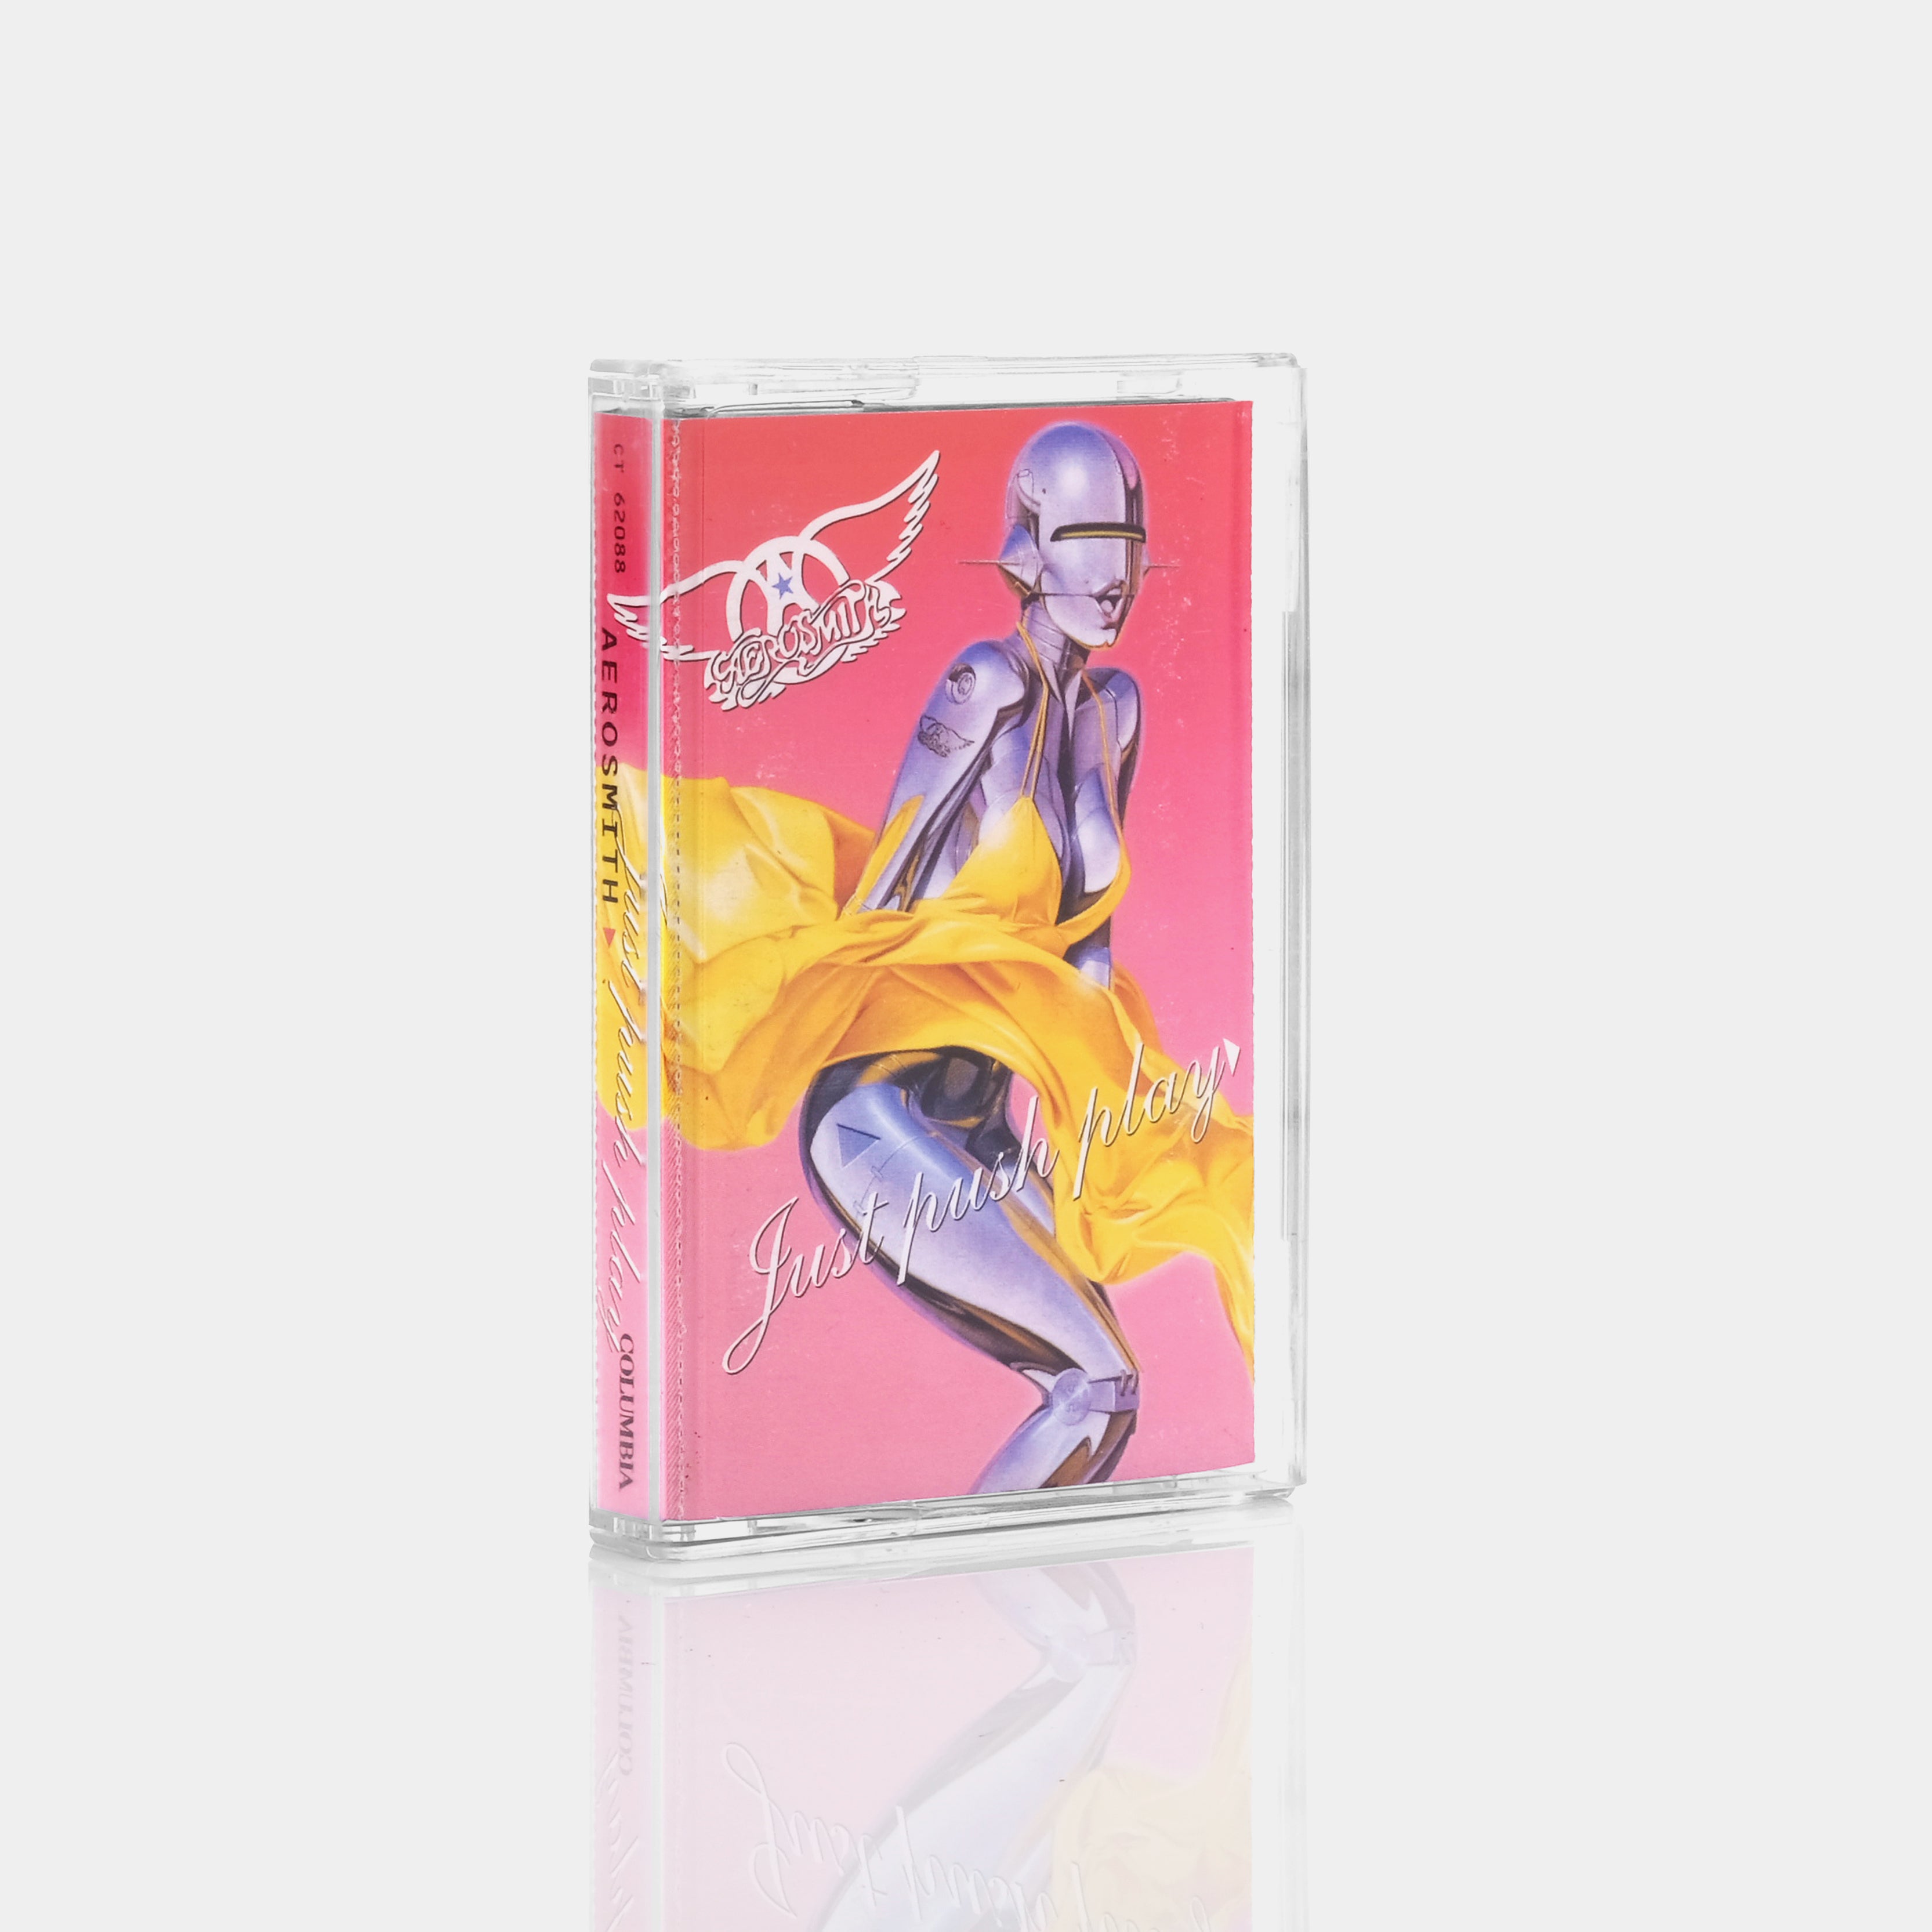 Aerosmith - Just Push Play Cassette Tape